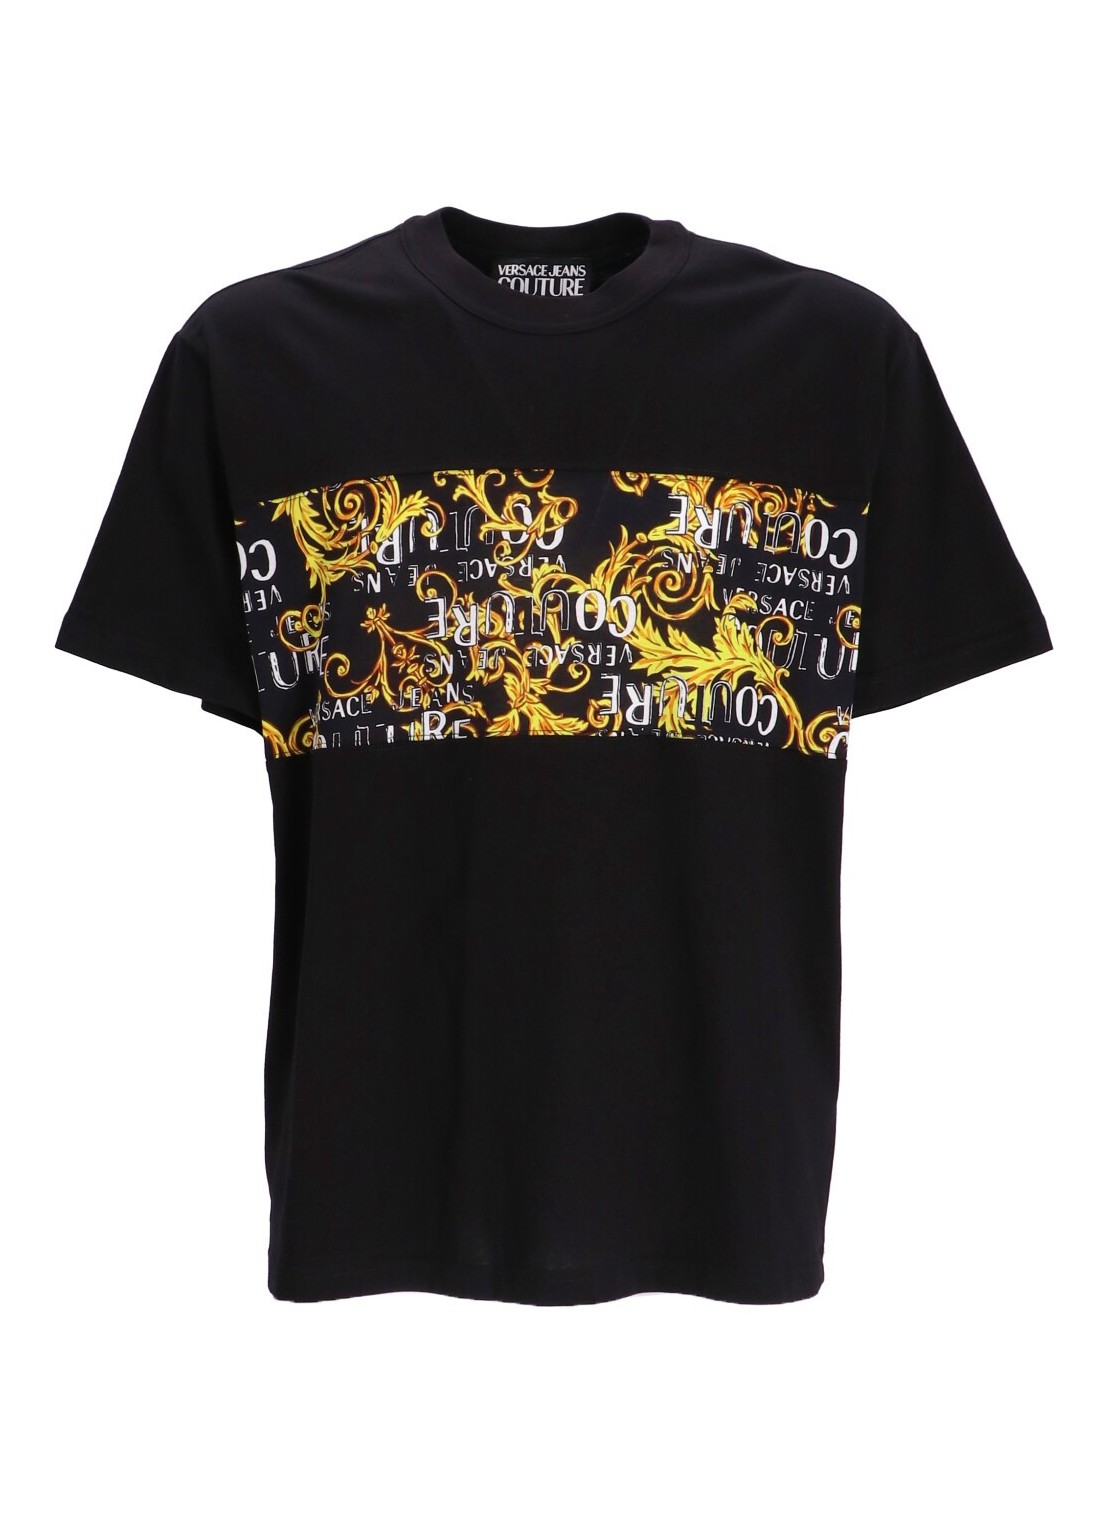 versace 74up601 r contr logo baroque t-shirt - 74gah617 g89 Talla S